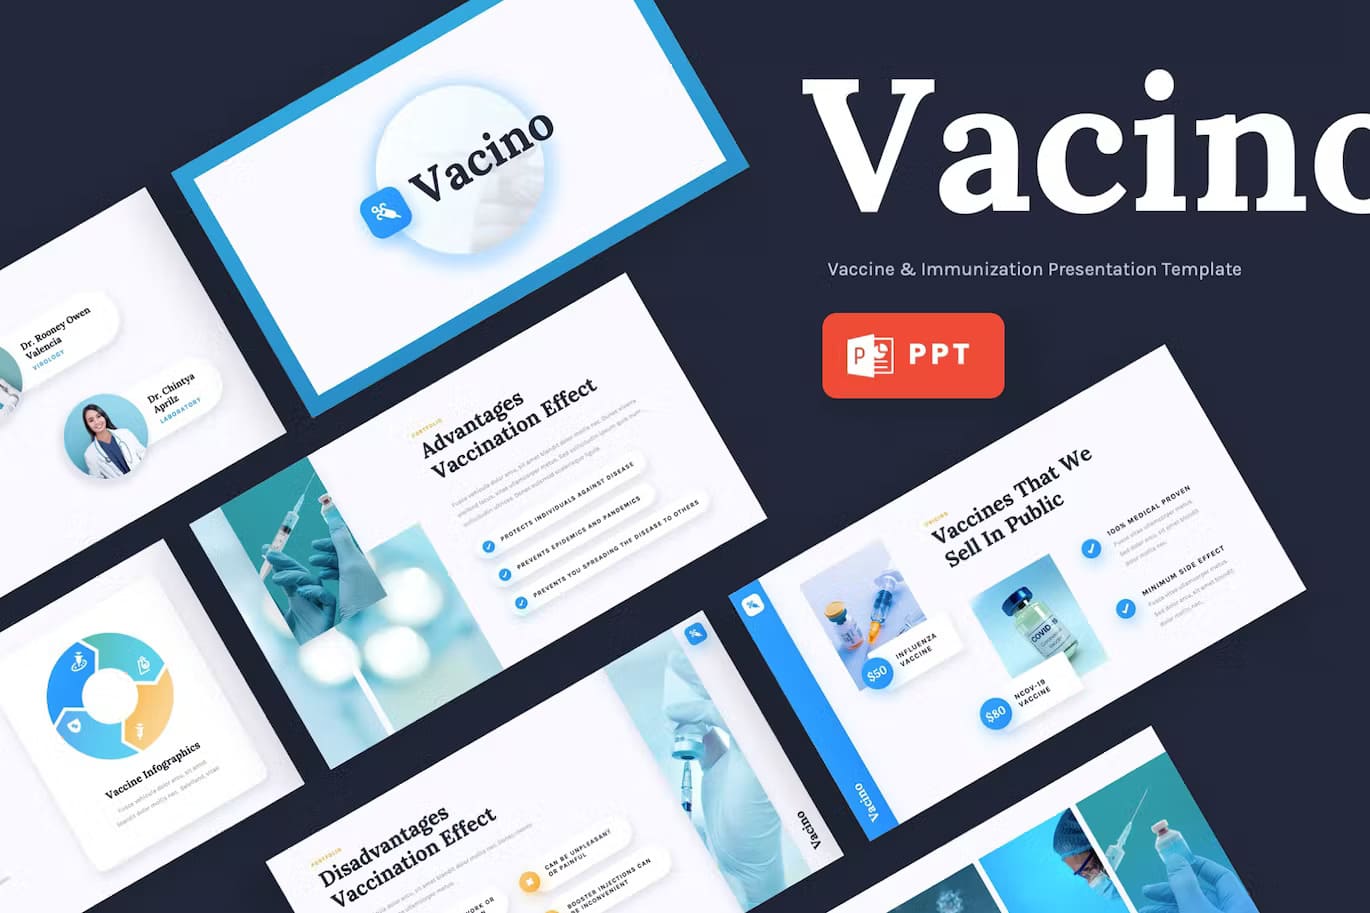 Vaccine and immunization presentation template.